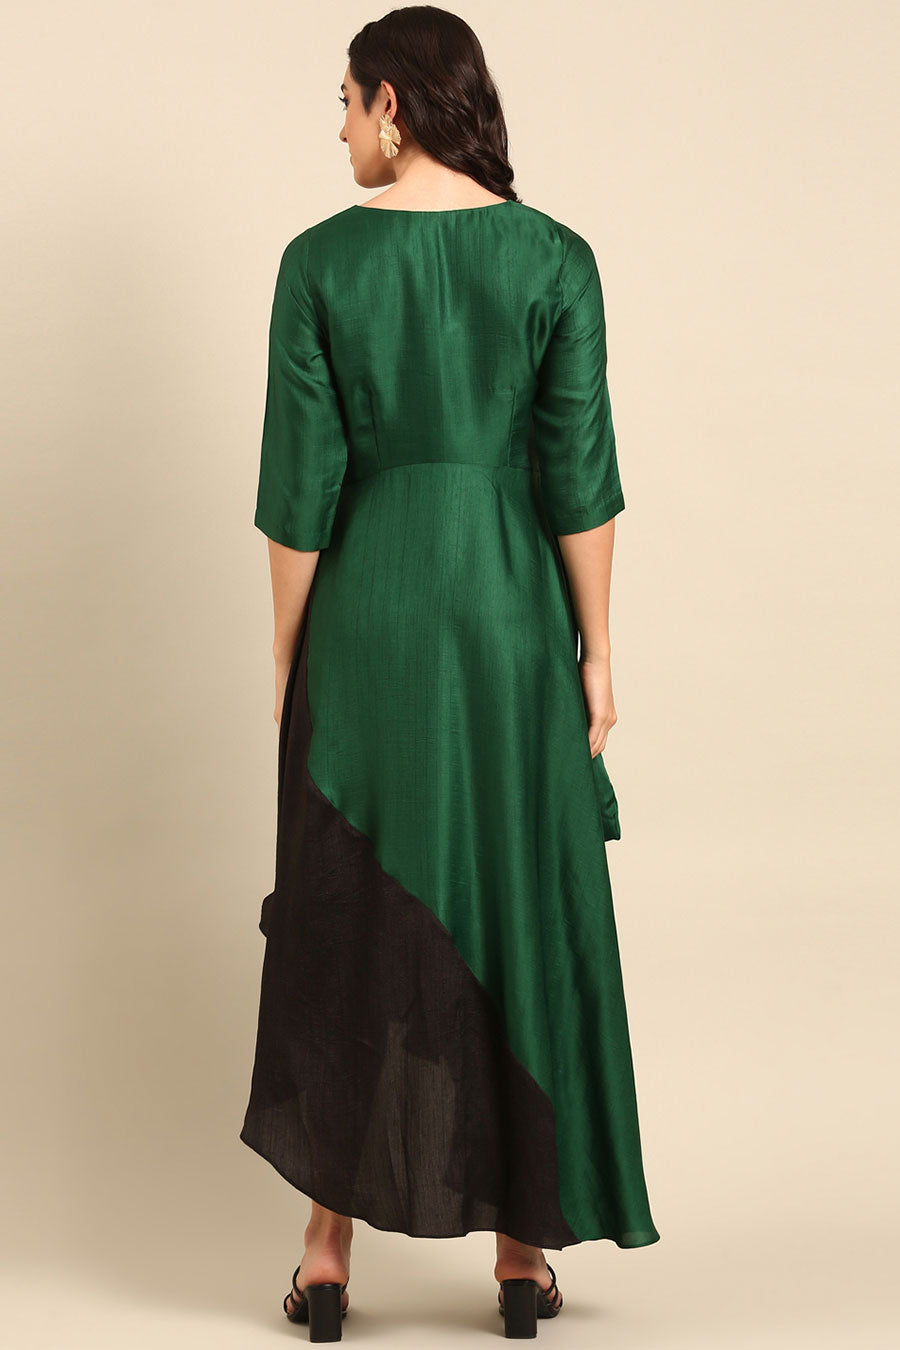 Green & Black Asymmetric Dress